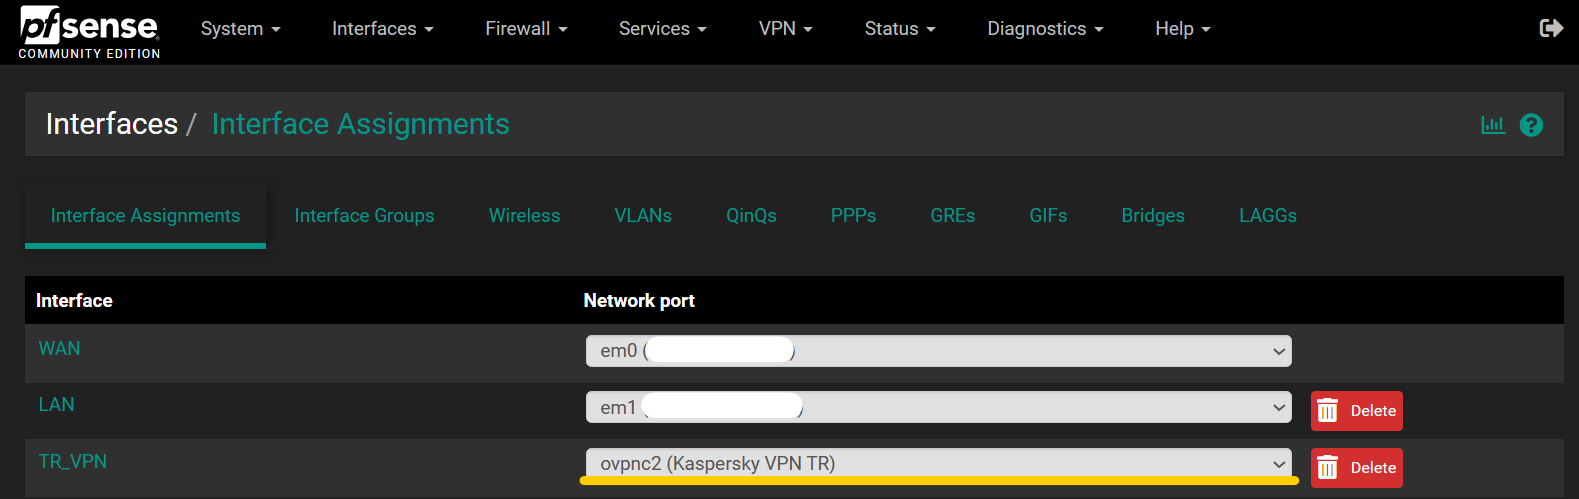 How to configure Kaspersky VPN on pfSense using OpenVPN